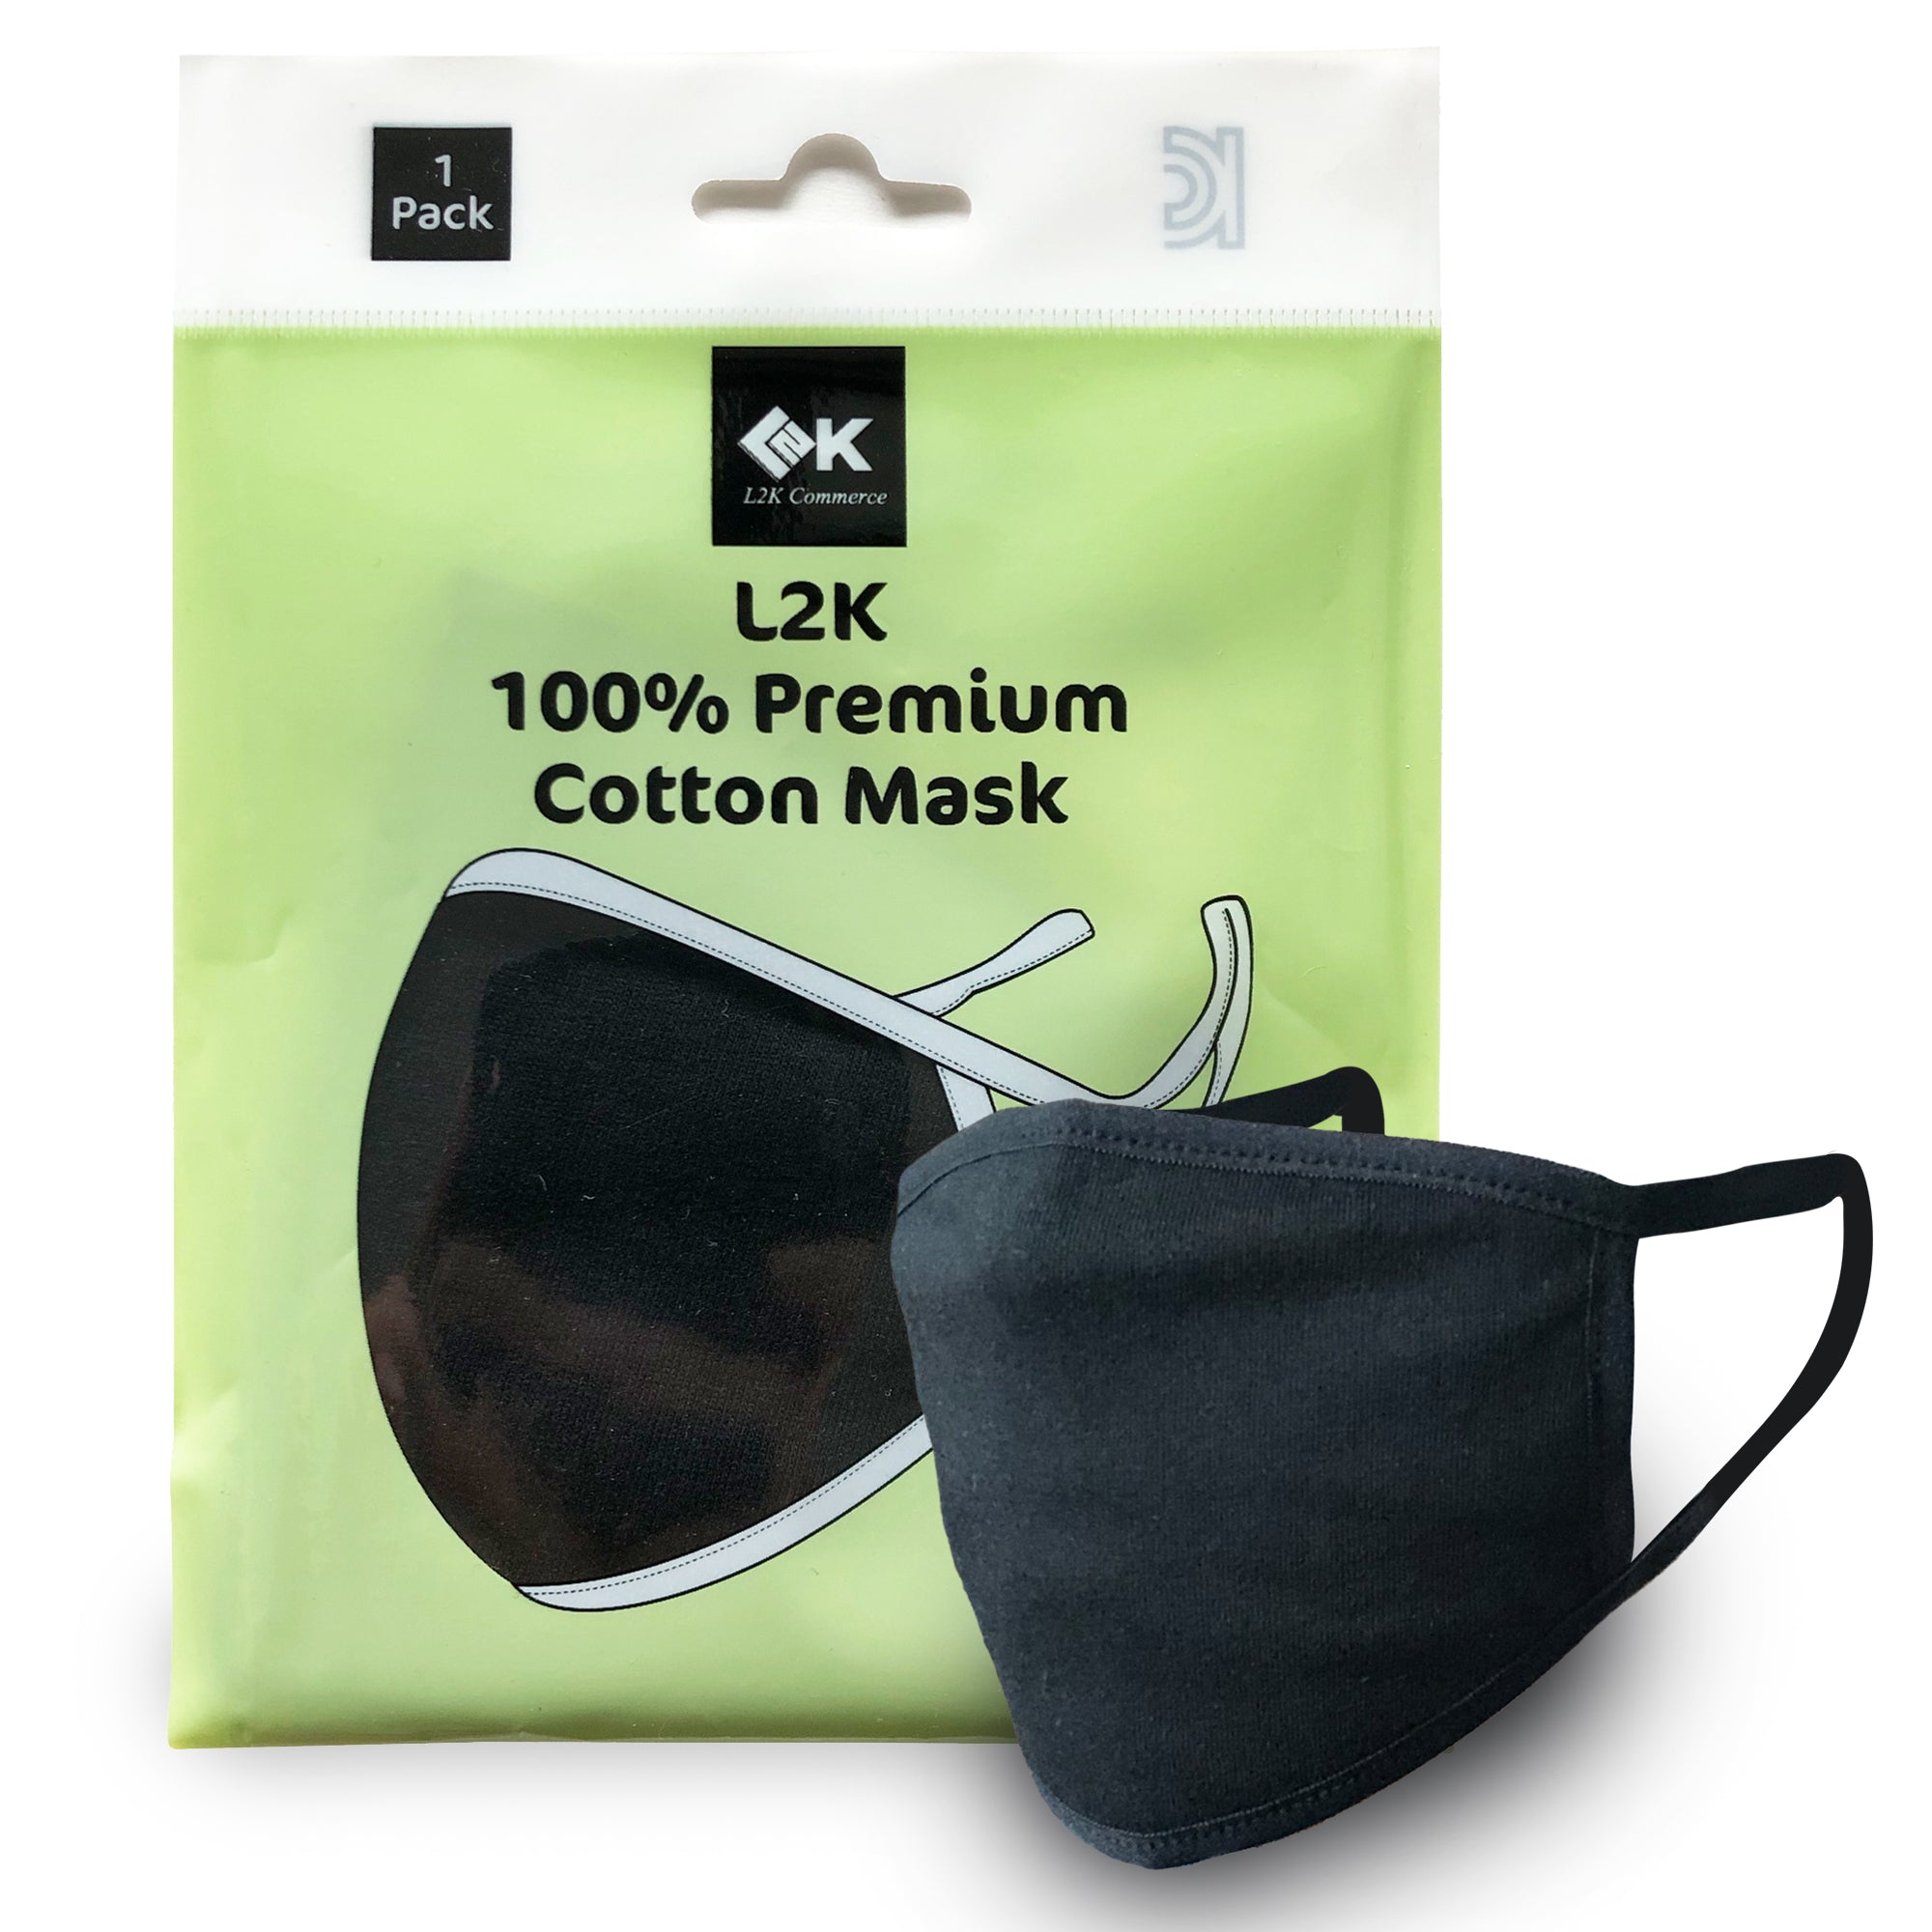 (MADE IN KOREA) L2K 100% Premium Cotton Mask - Washable & Reusable